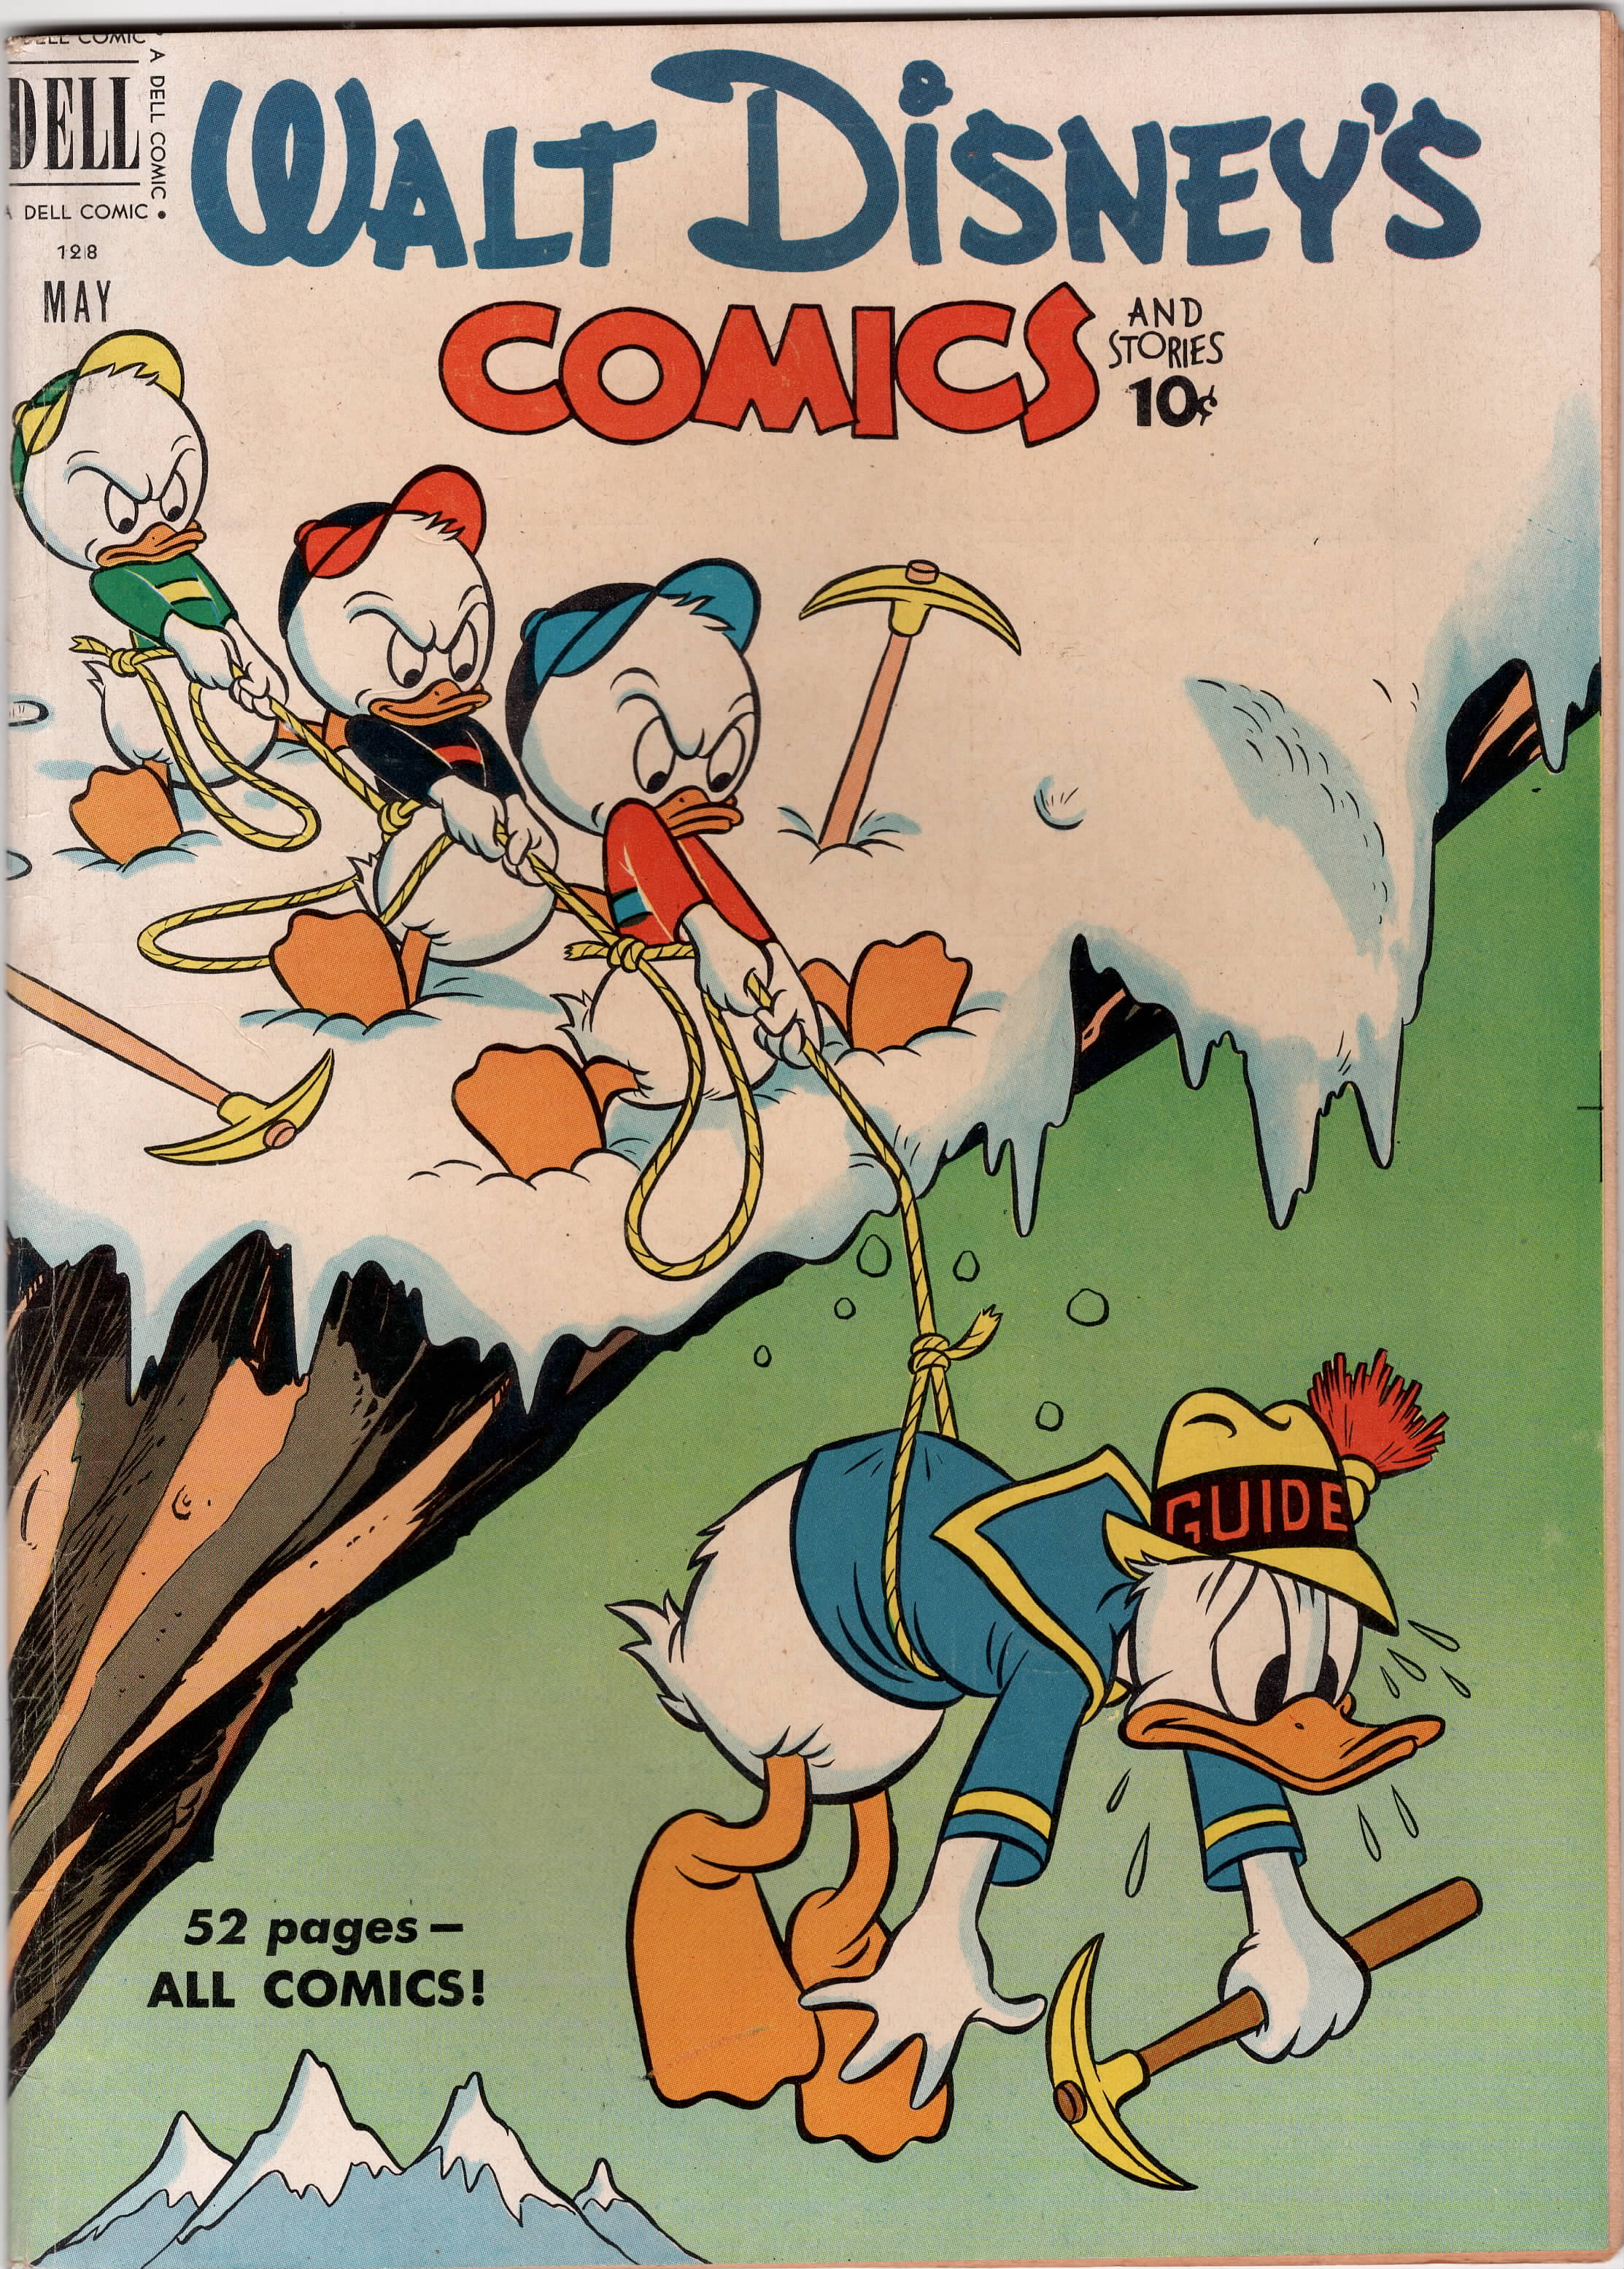 Walt Disney's Comics & Stories #128